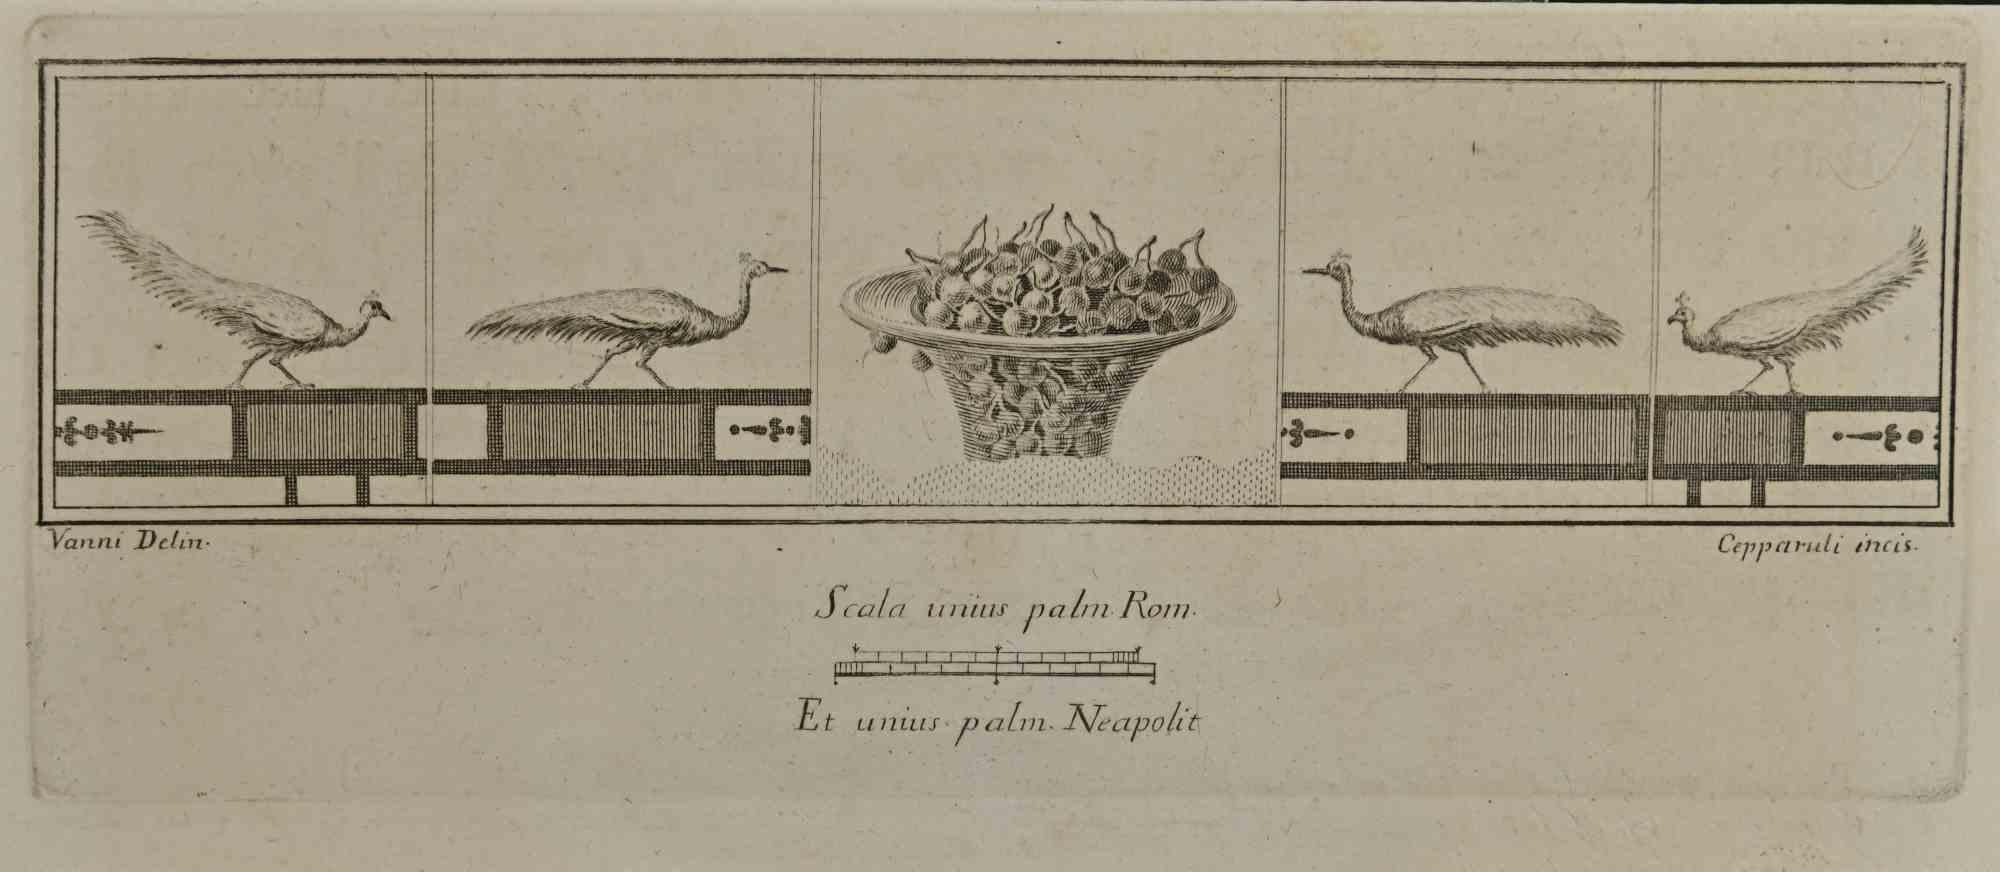 Francesco Cepparoli Figurative Print - Cornucopia of Cherries - Etching Ferancesco Cepparoli  - 18th Century